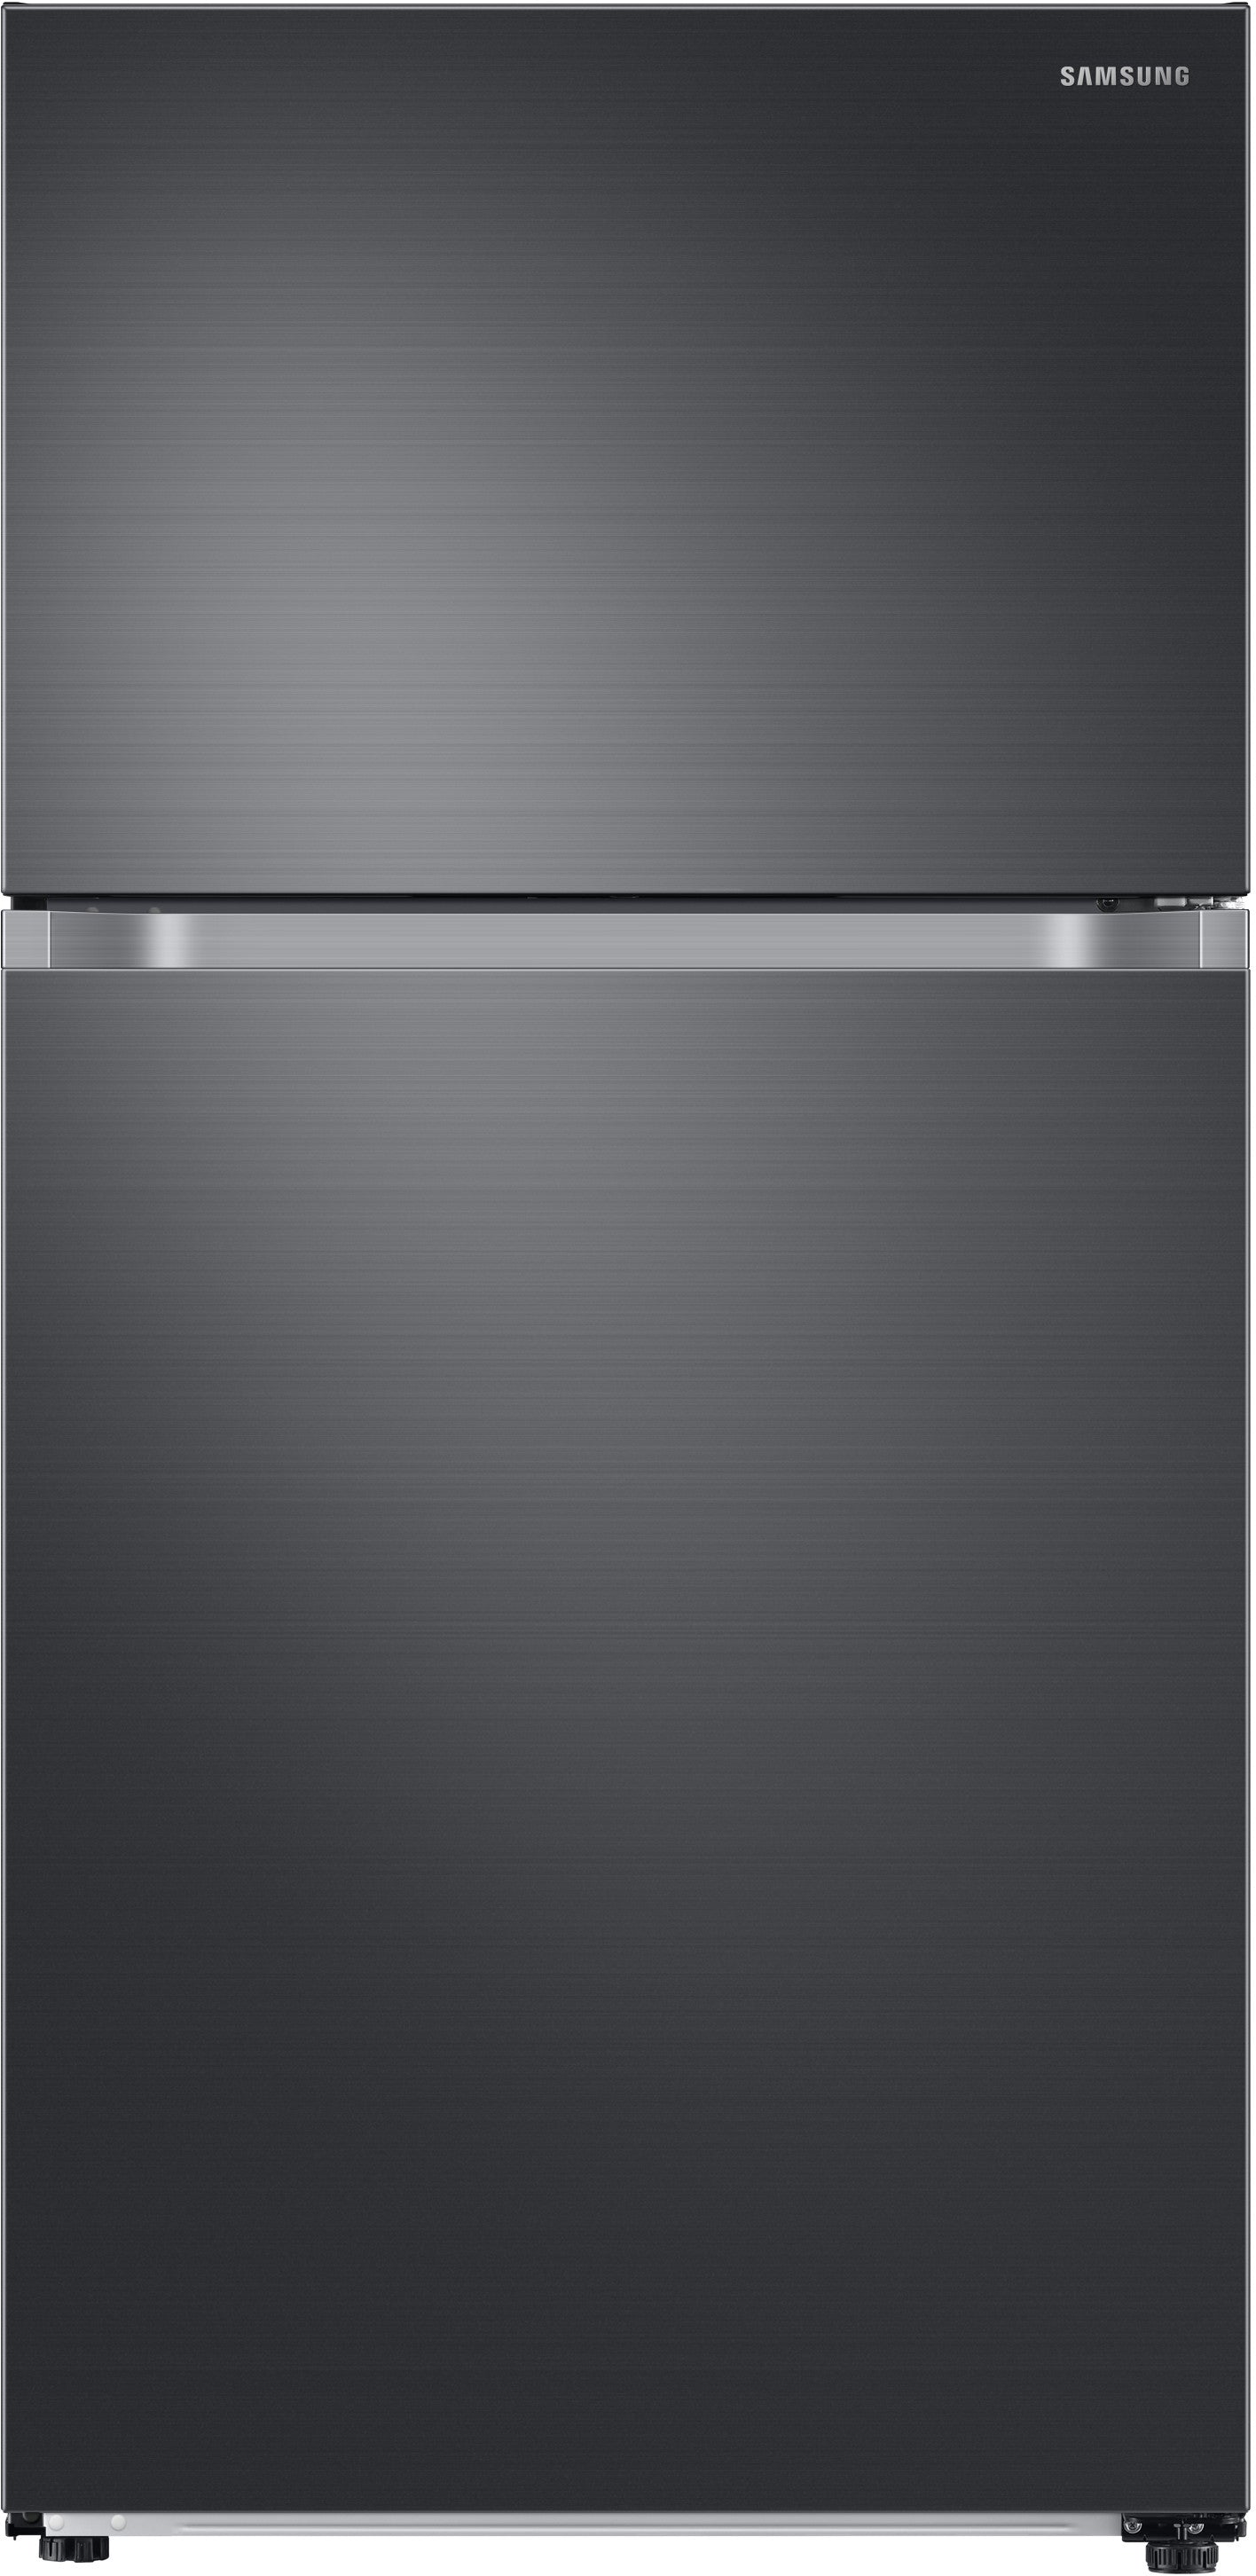 Samsung RT21M6213SG/AA 21 Cu. Ft. Top Freezer Refrigerator With Flex zone - Samsung Parts USA